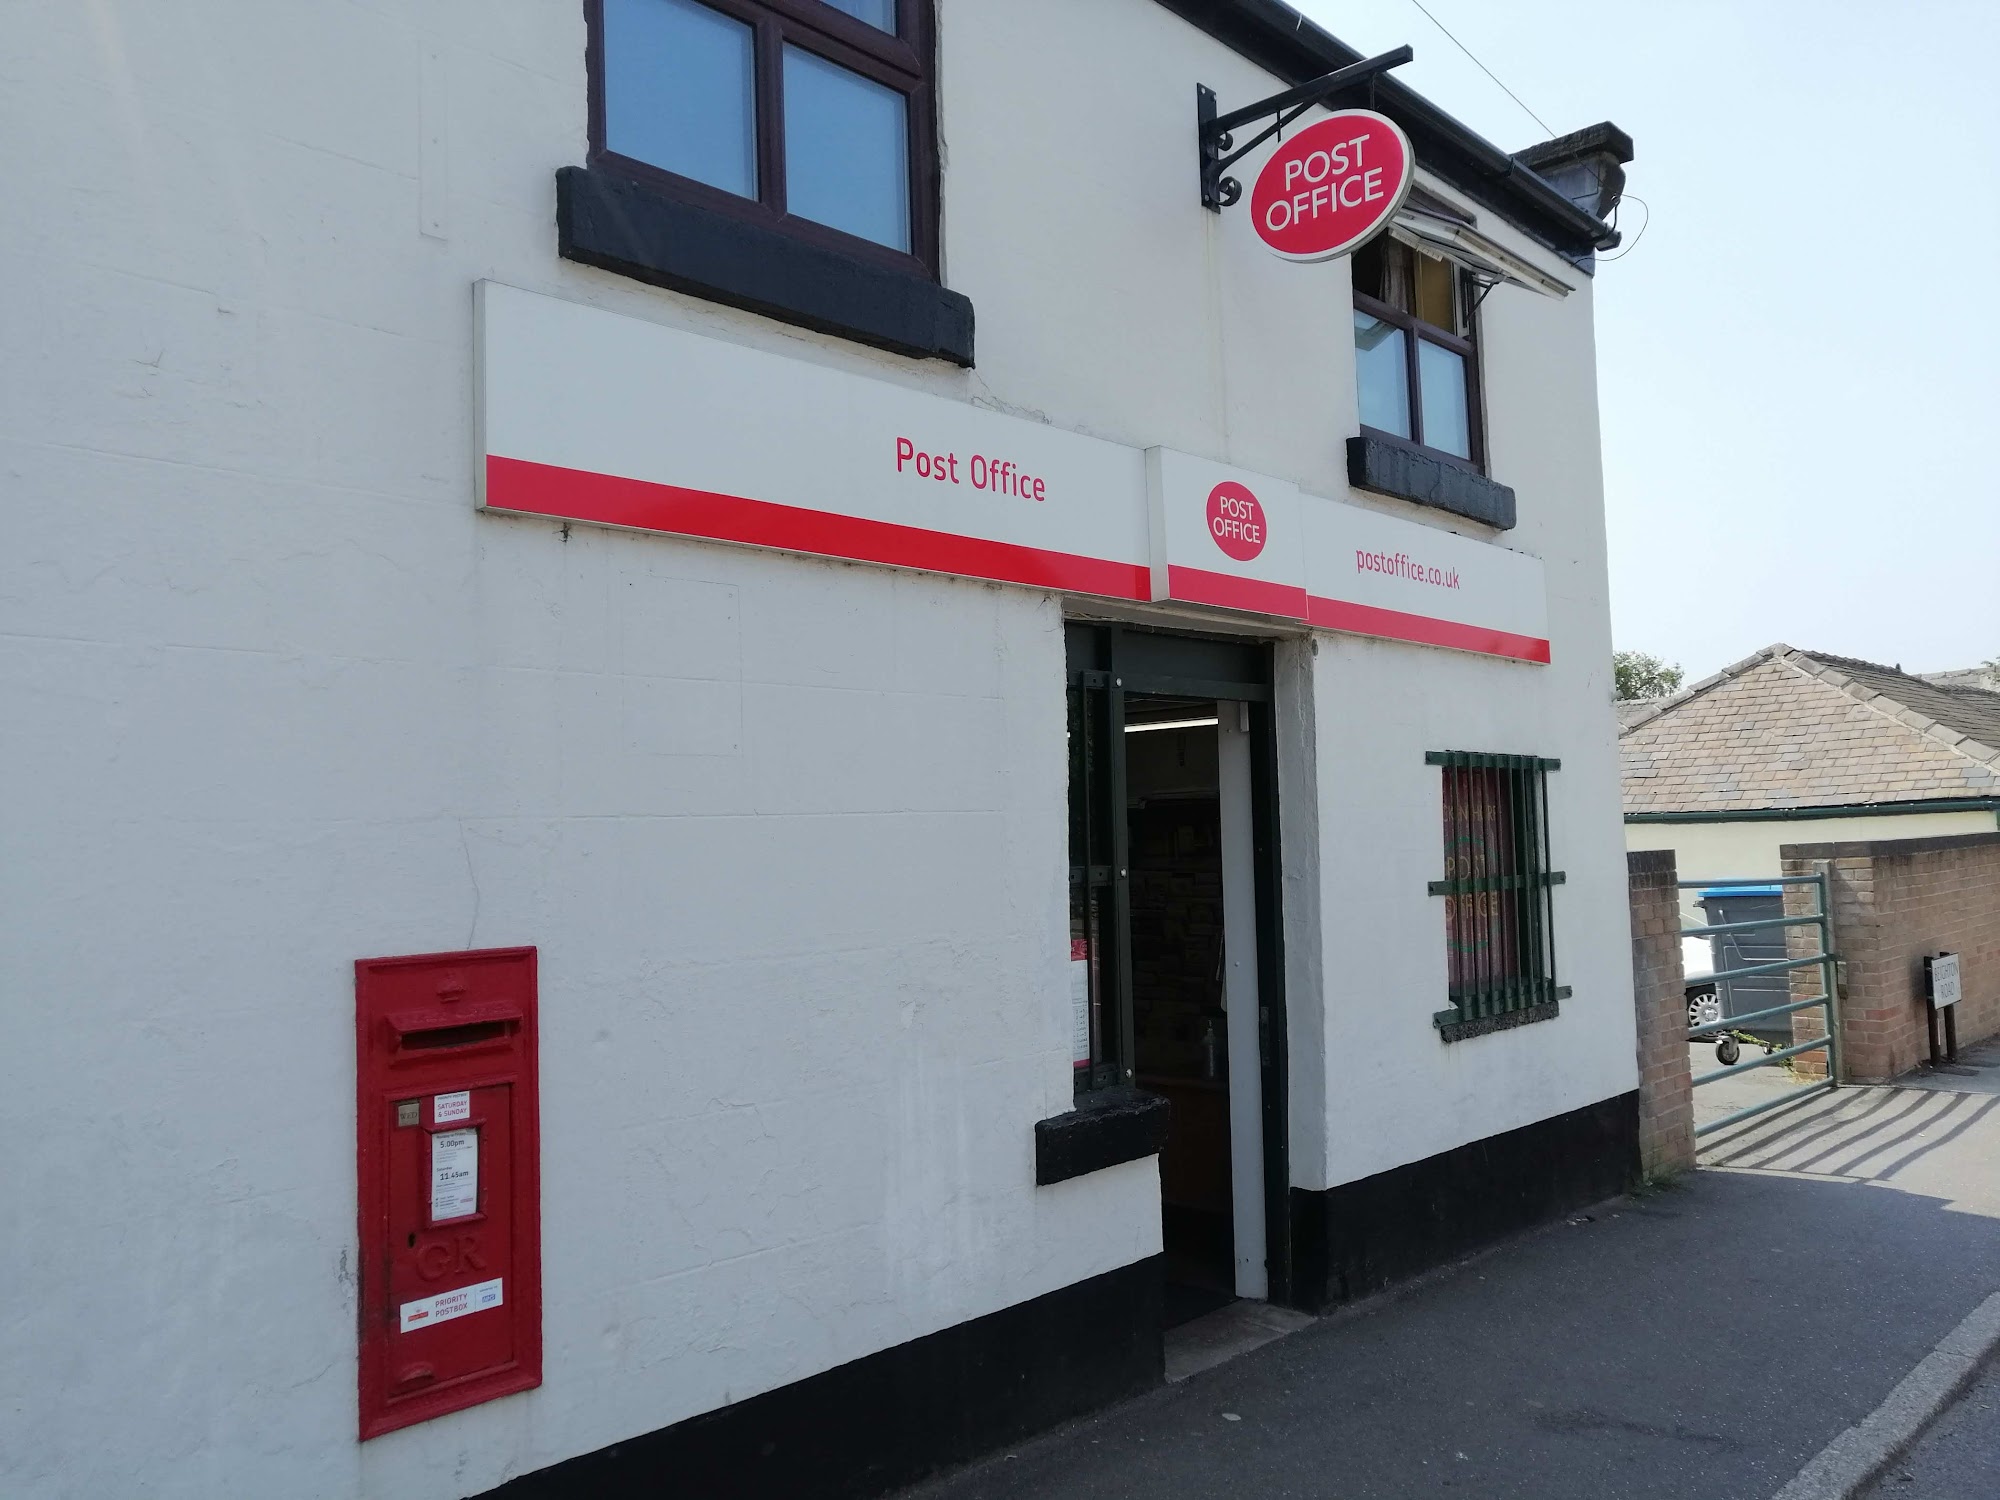 Hackenthorpe Post Office